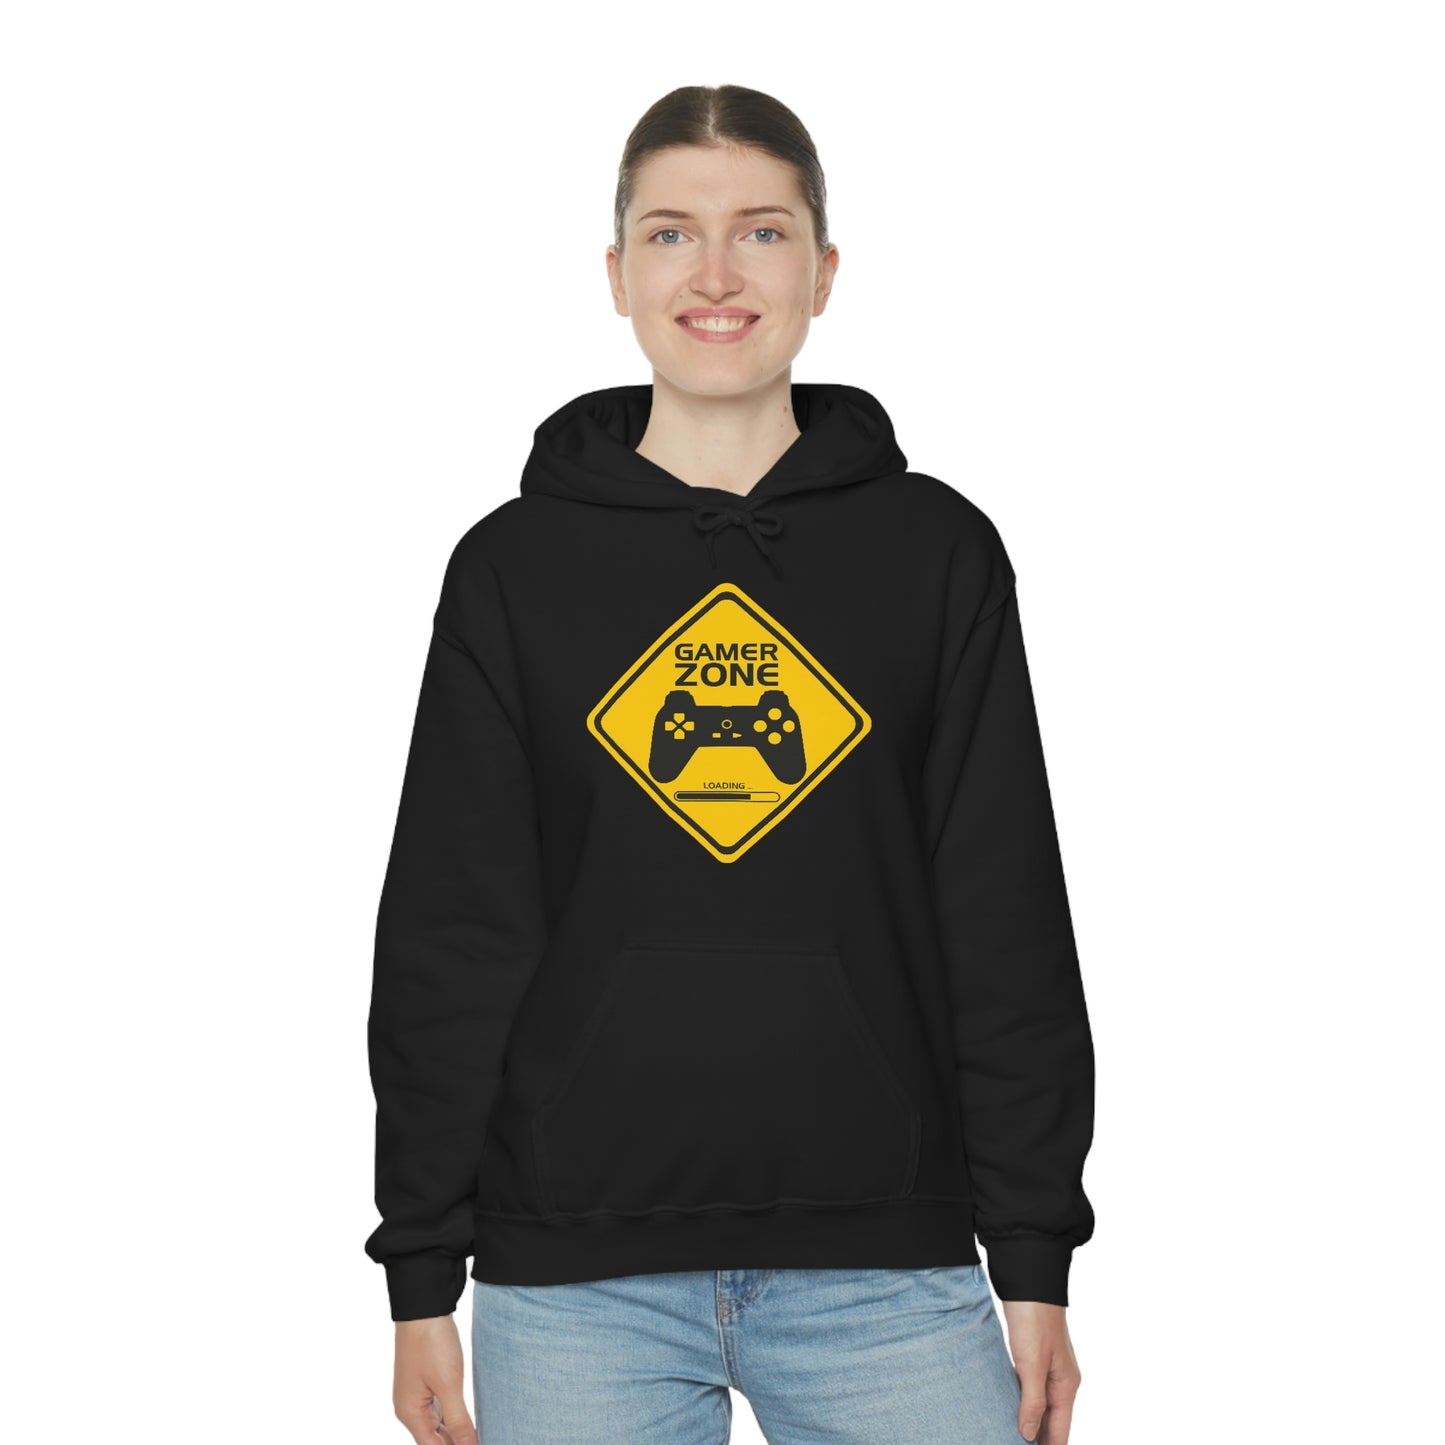 Gamer Zone Unisex Hooded Sweatshirt